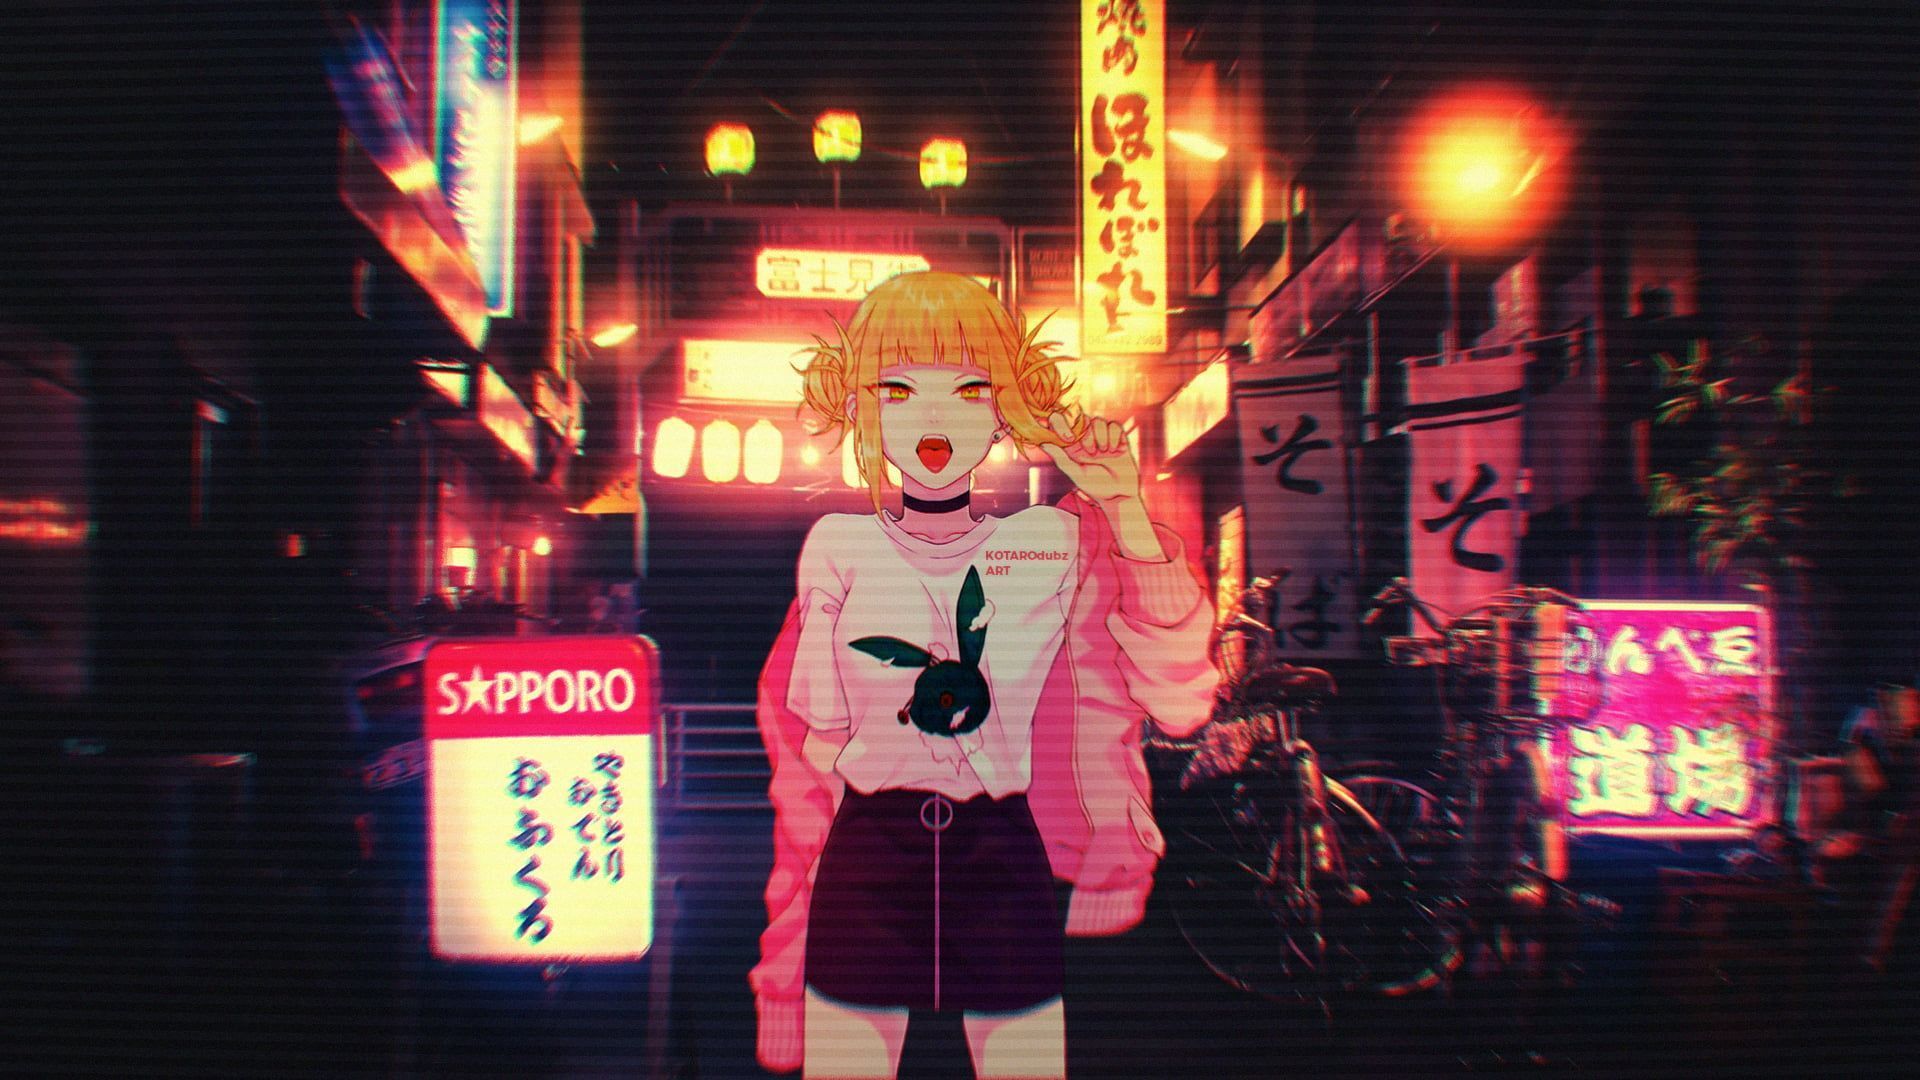 Aesthetic anime girl in the street at night wallpaper - VHS